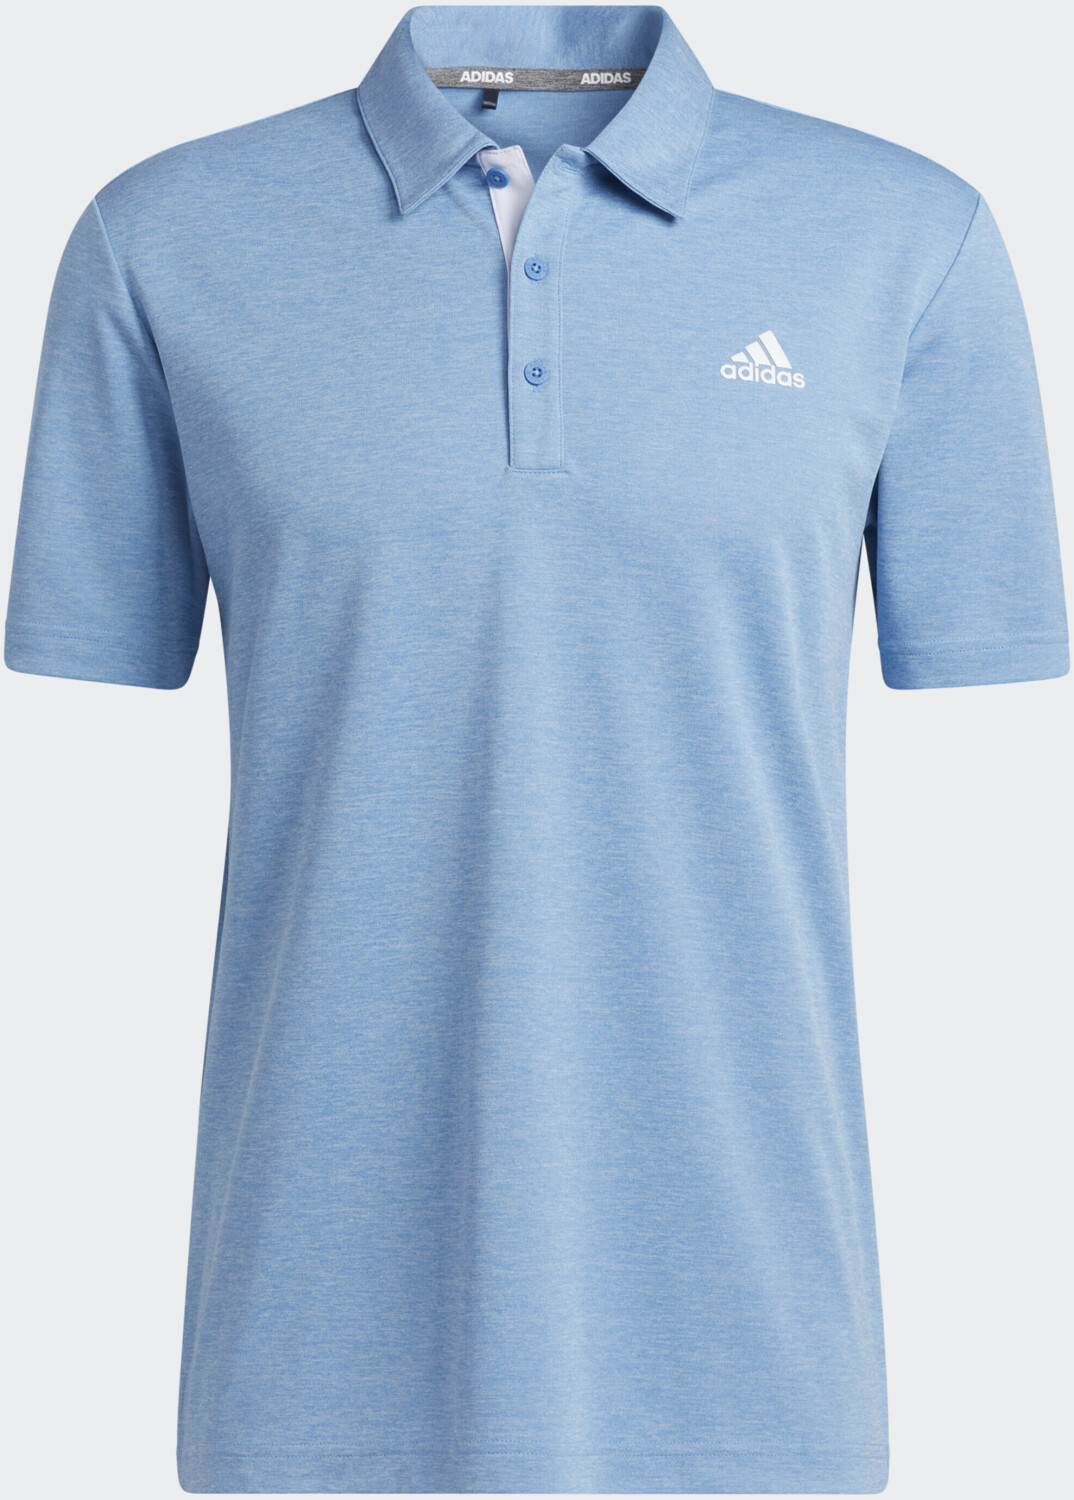 Adidas Golf Advantage Novelty Heathered Polo Shirt focus blue melnage (GU6081)